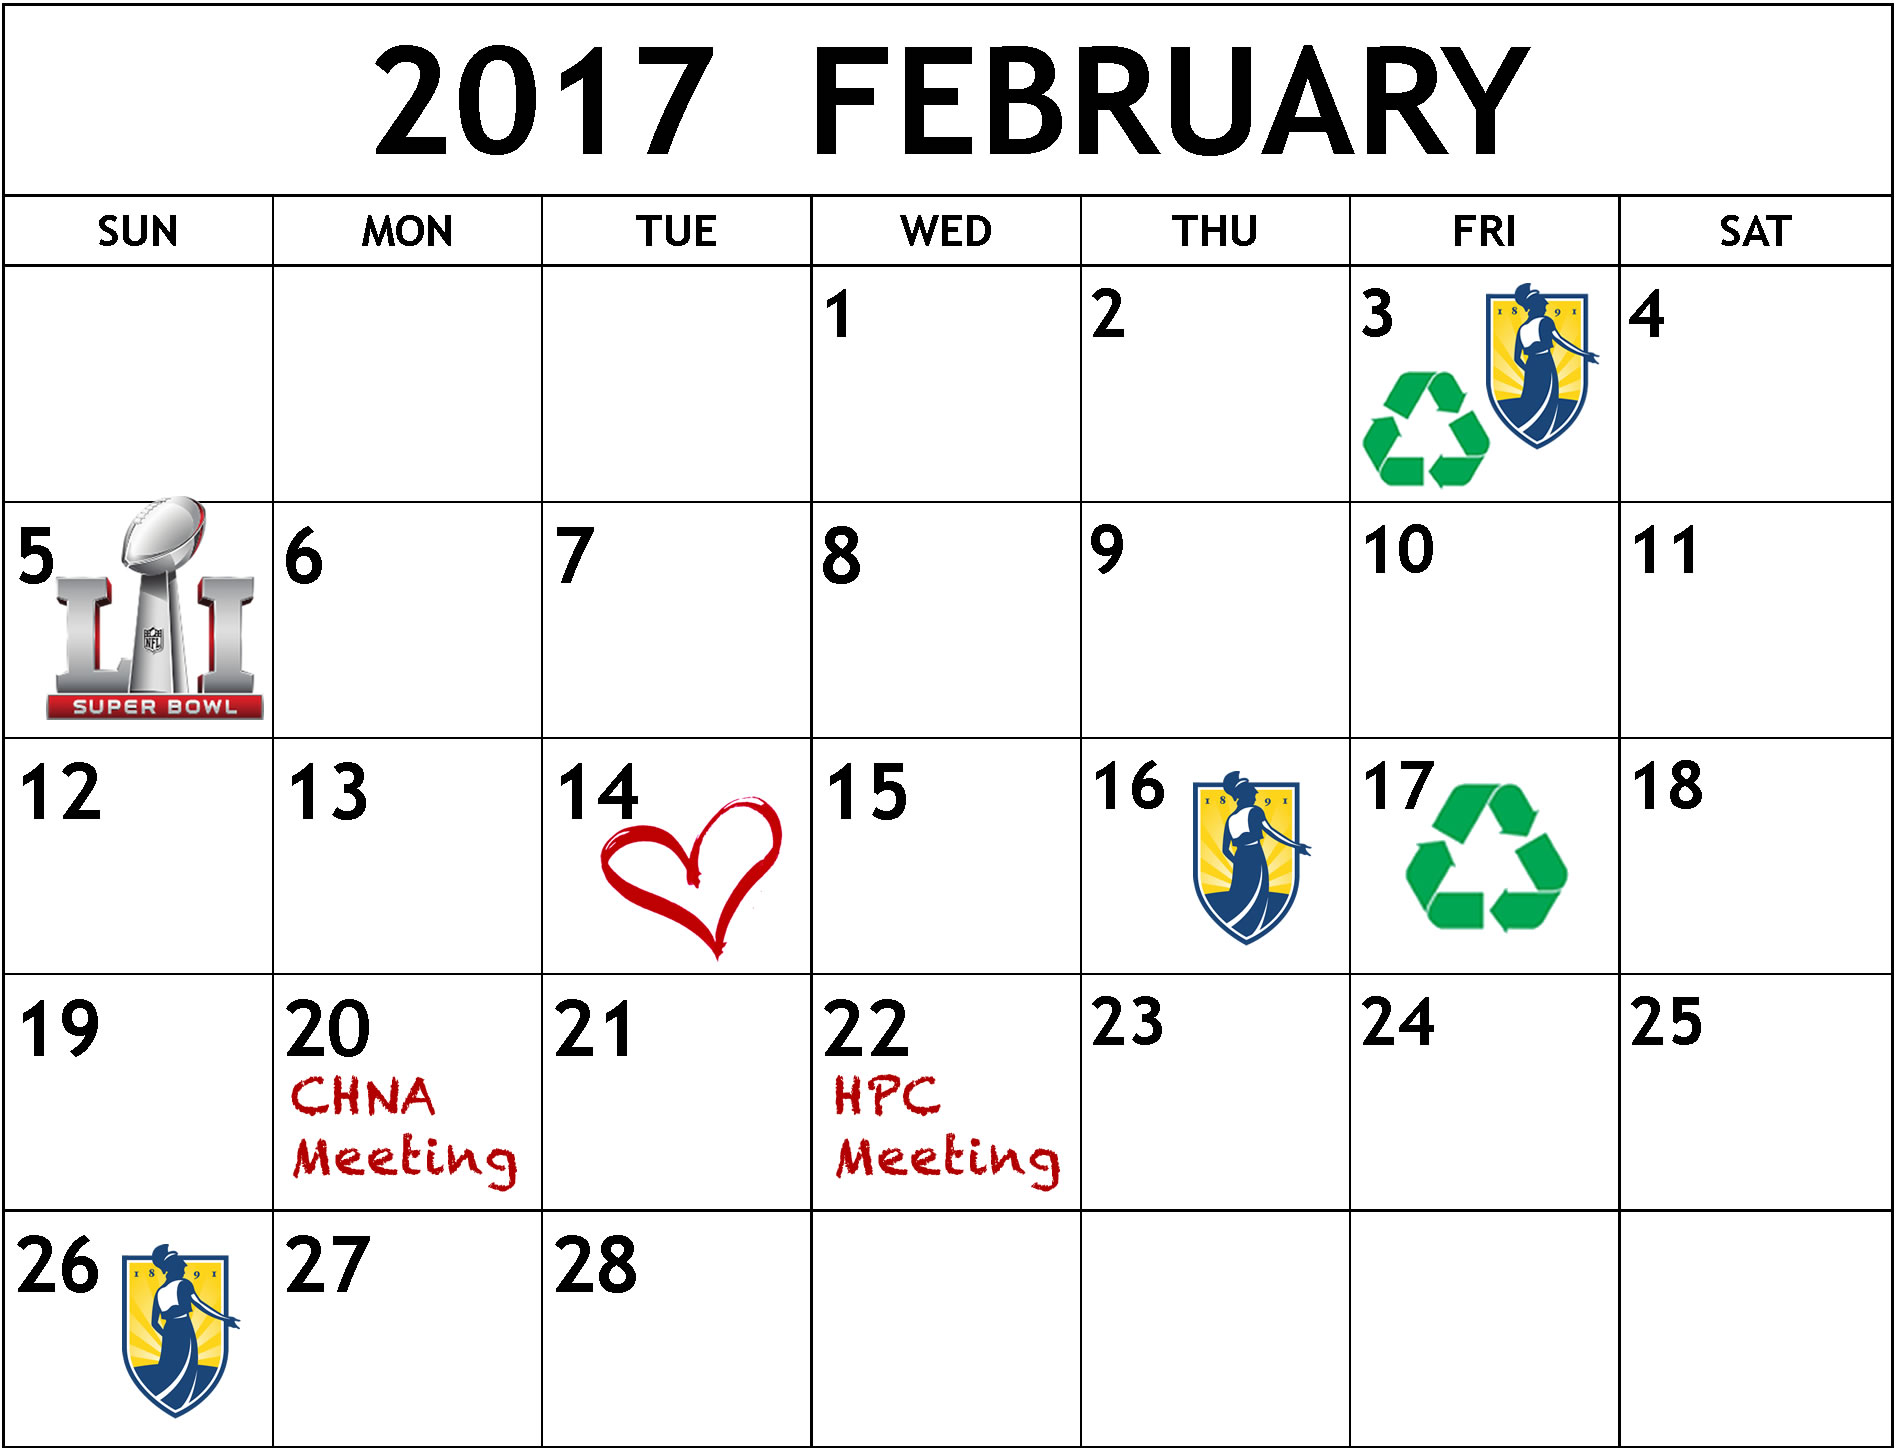 February 2017 calendar of events